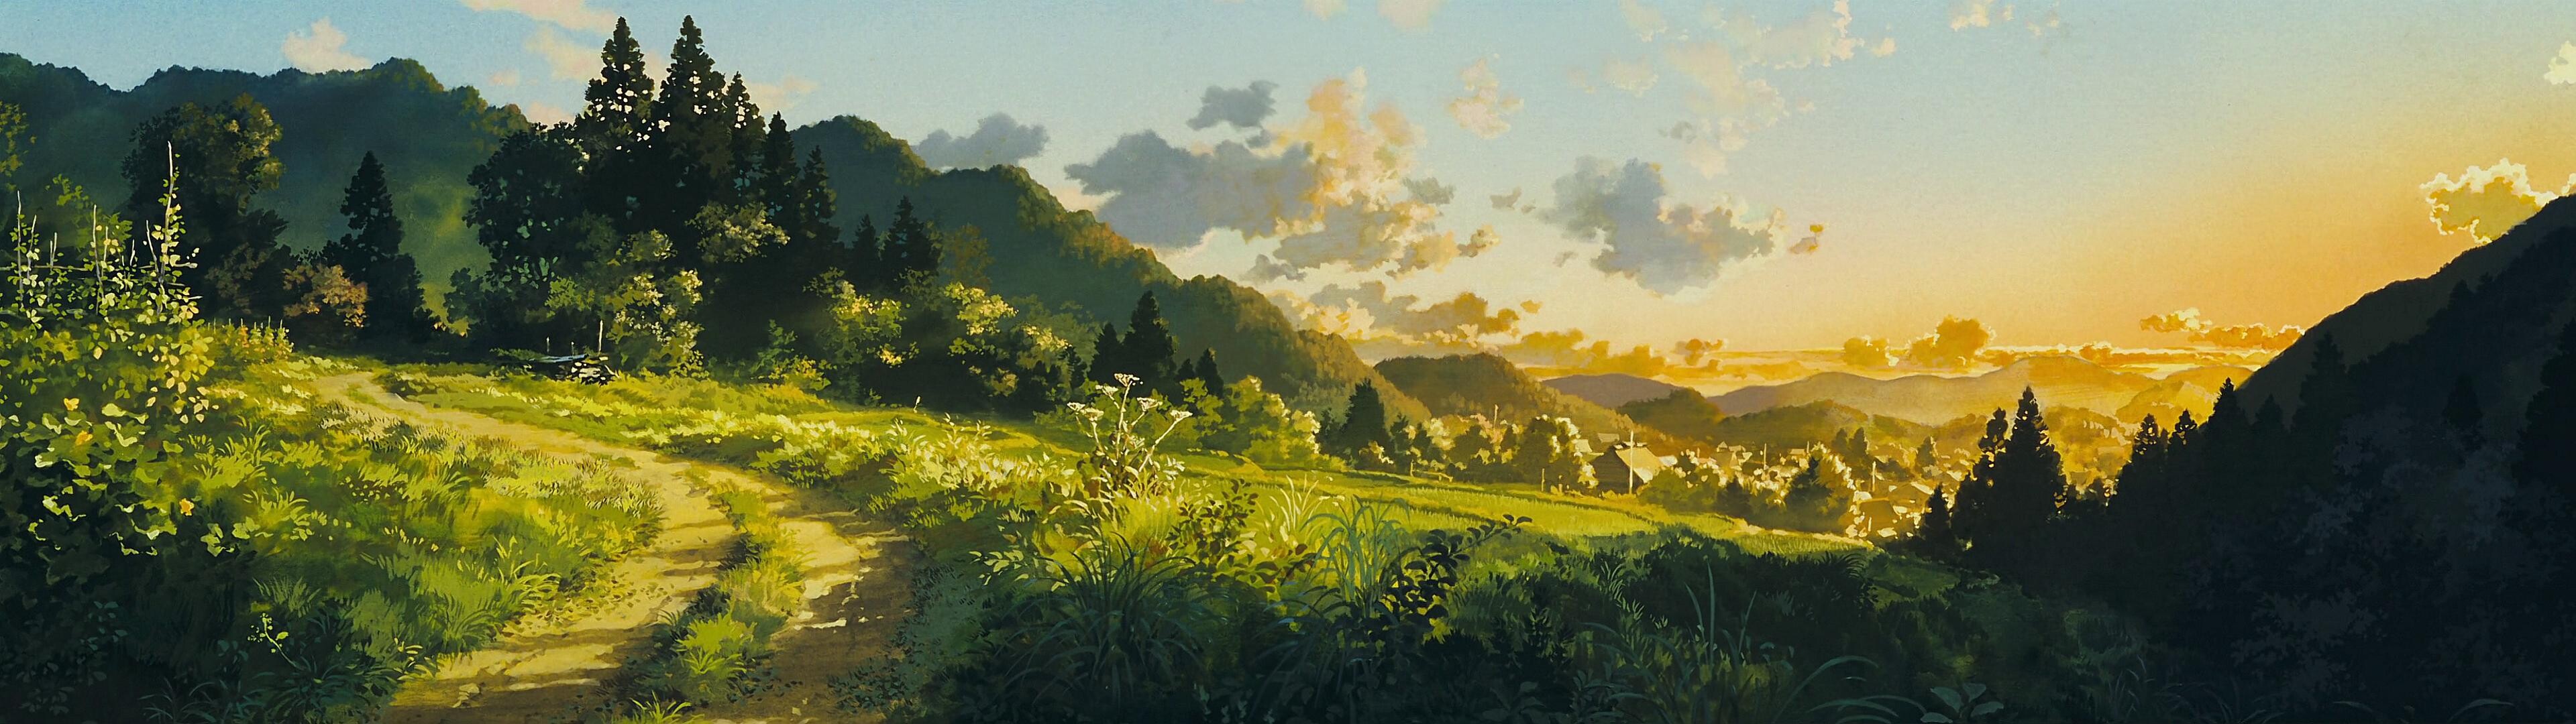 Studio Ghibli: The idea of Hayao Miyazaki, A Japanese animator, director, producer, screenwriter, author, and manga artist. 3840x1080 Dual Screen Background.